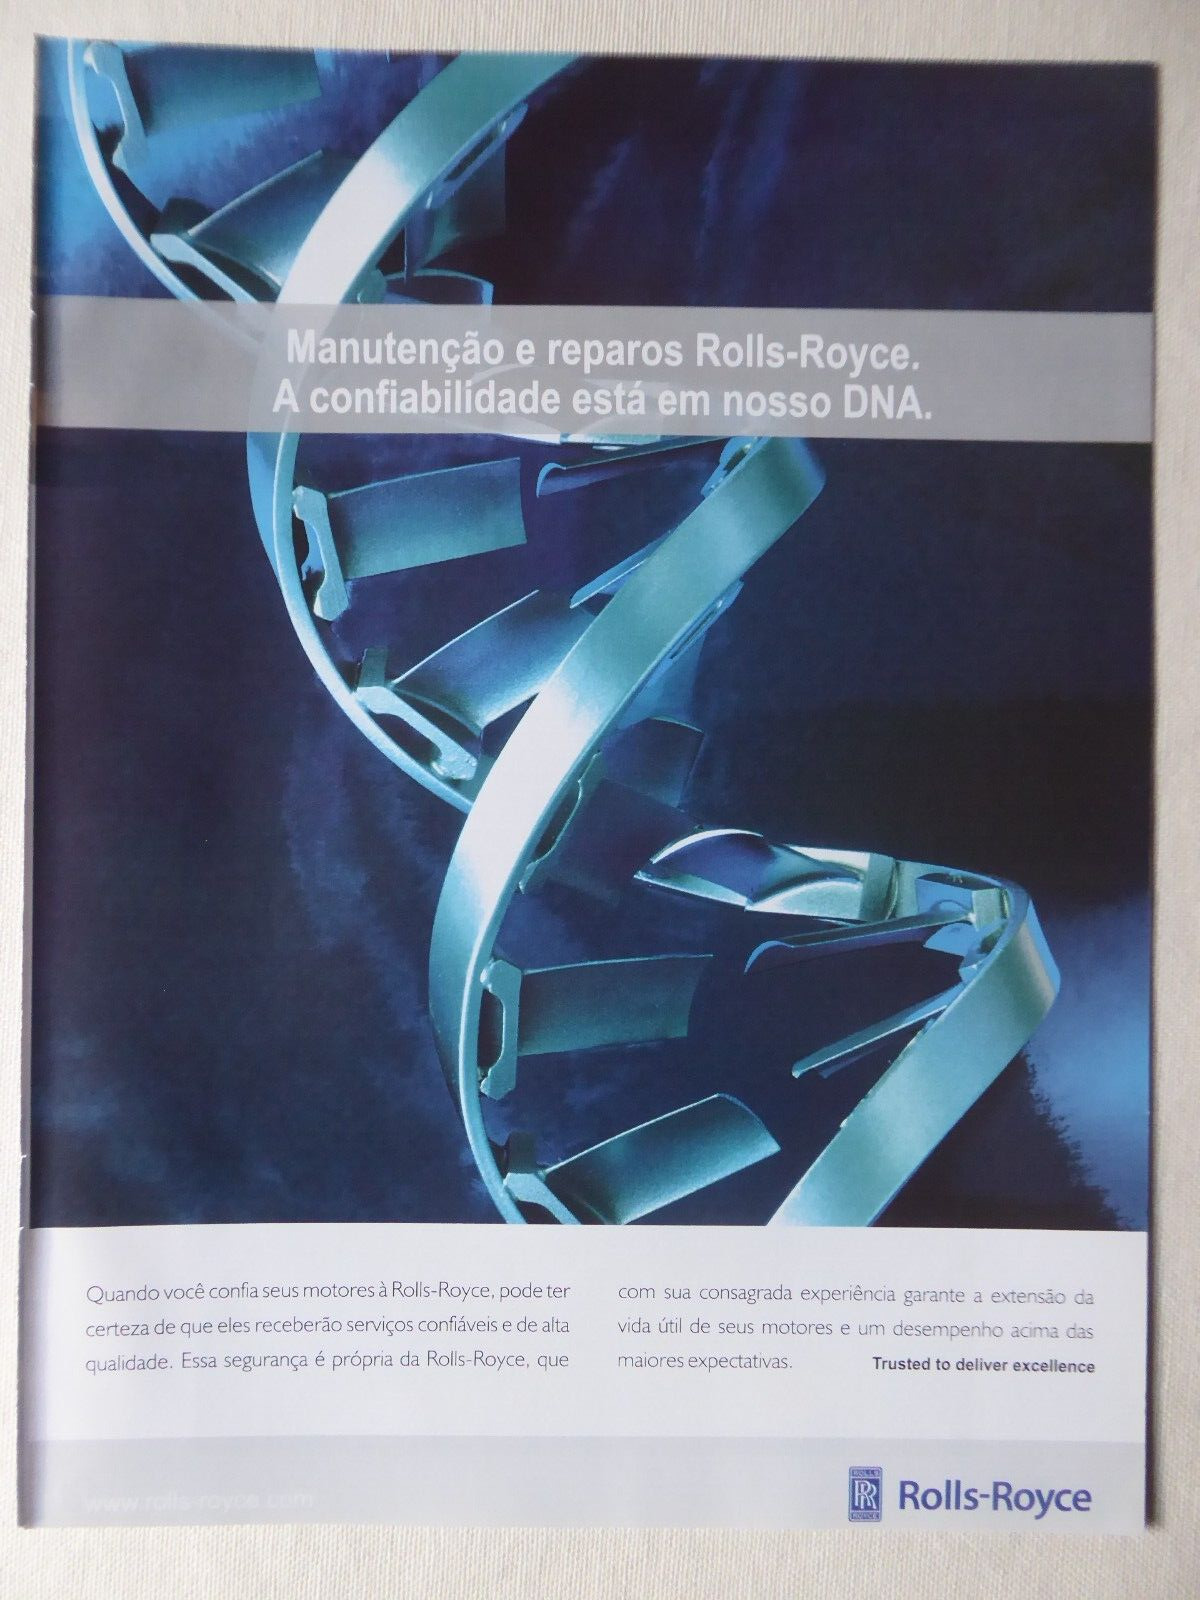 2008 PUB ROLLS-ROYCE REPAIR OVERHAUL MAINTENANCE AVIATION DNA PORTUGUESE AD